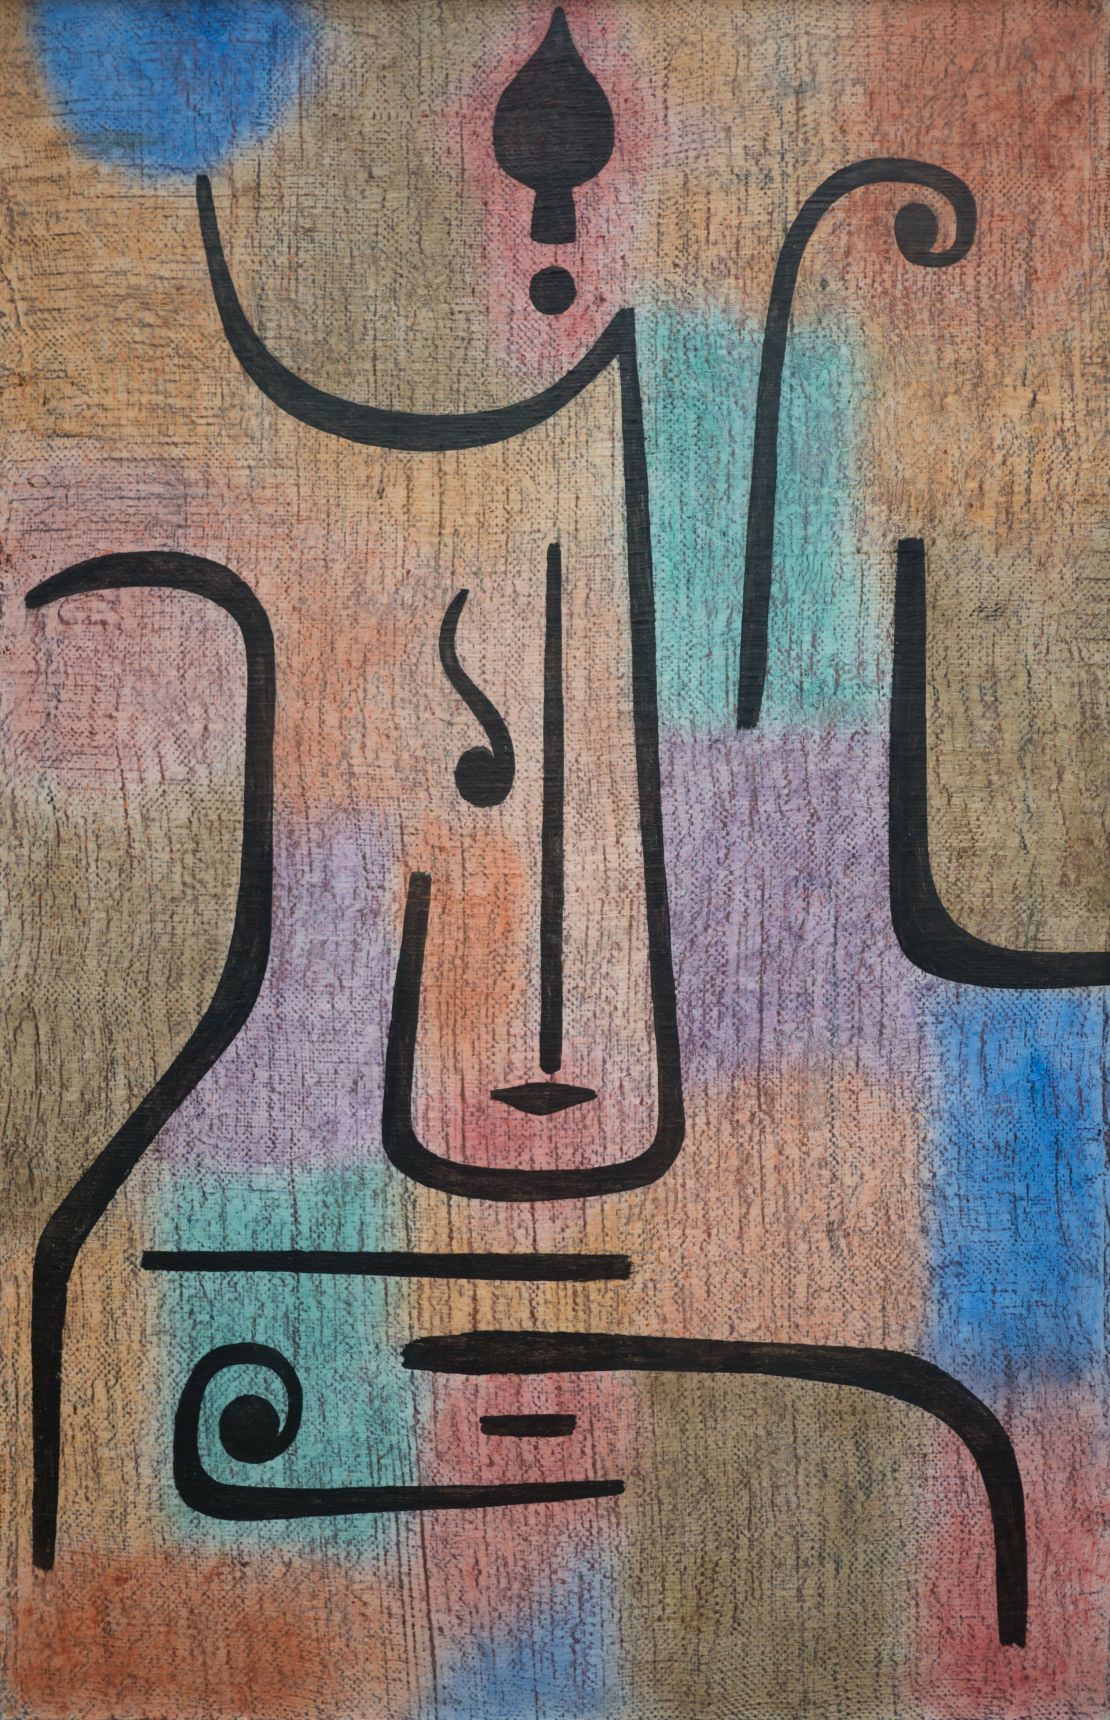 Paul Klee's 1938 paining "Erzengel"